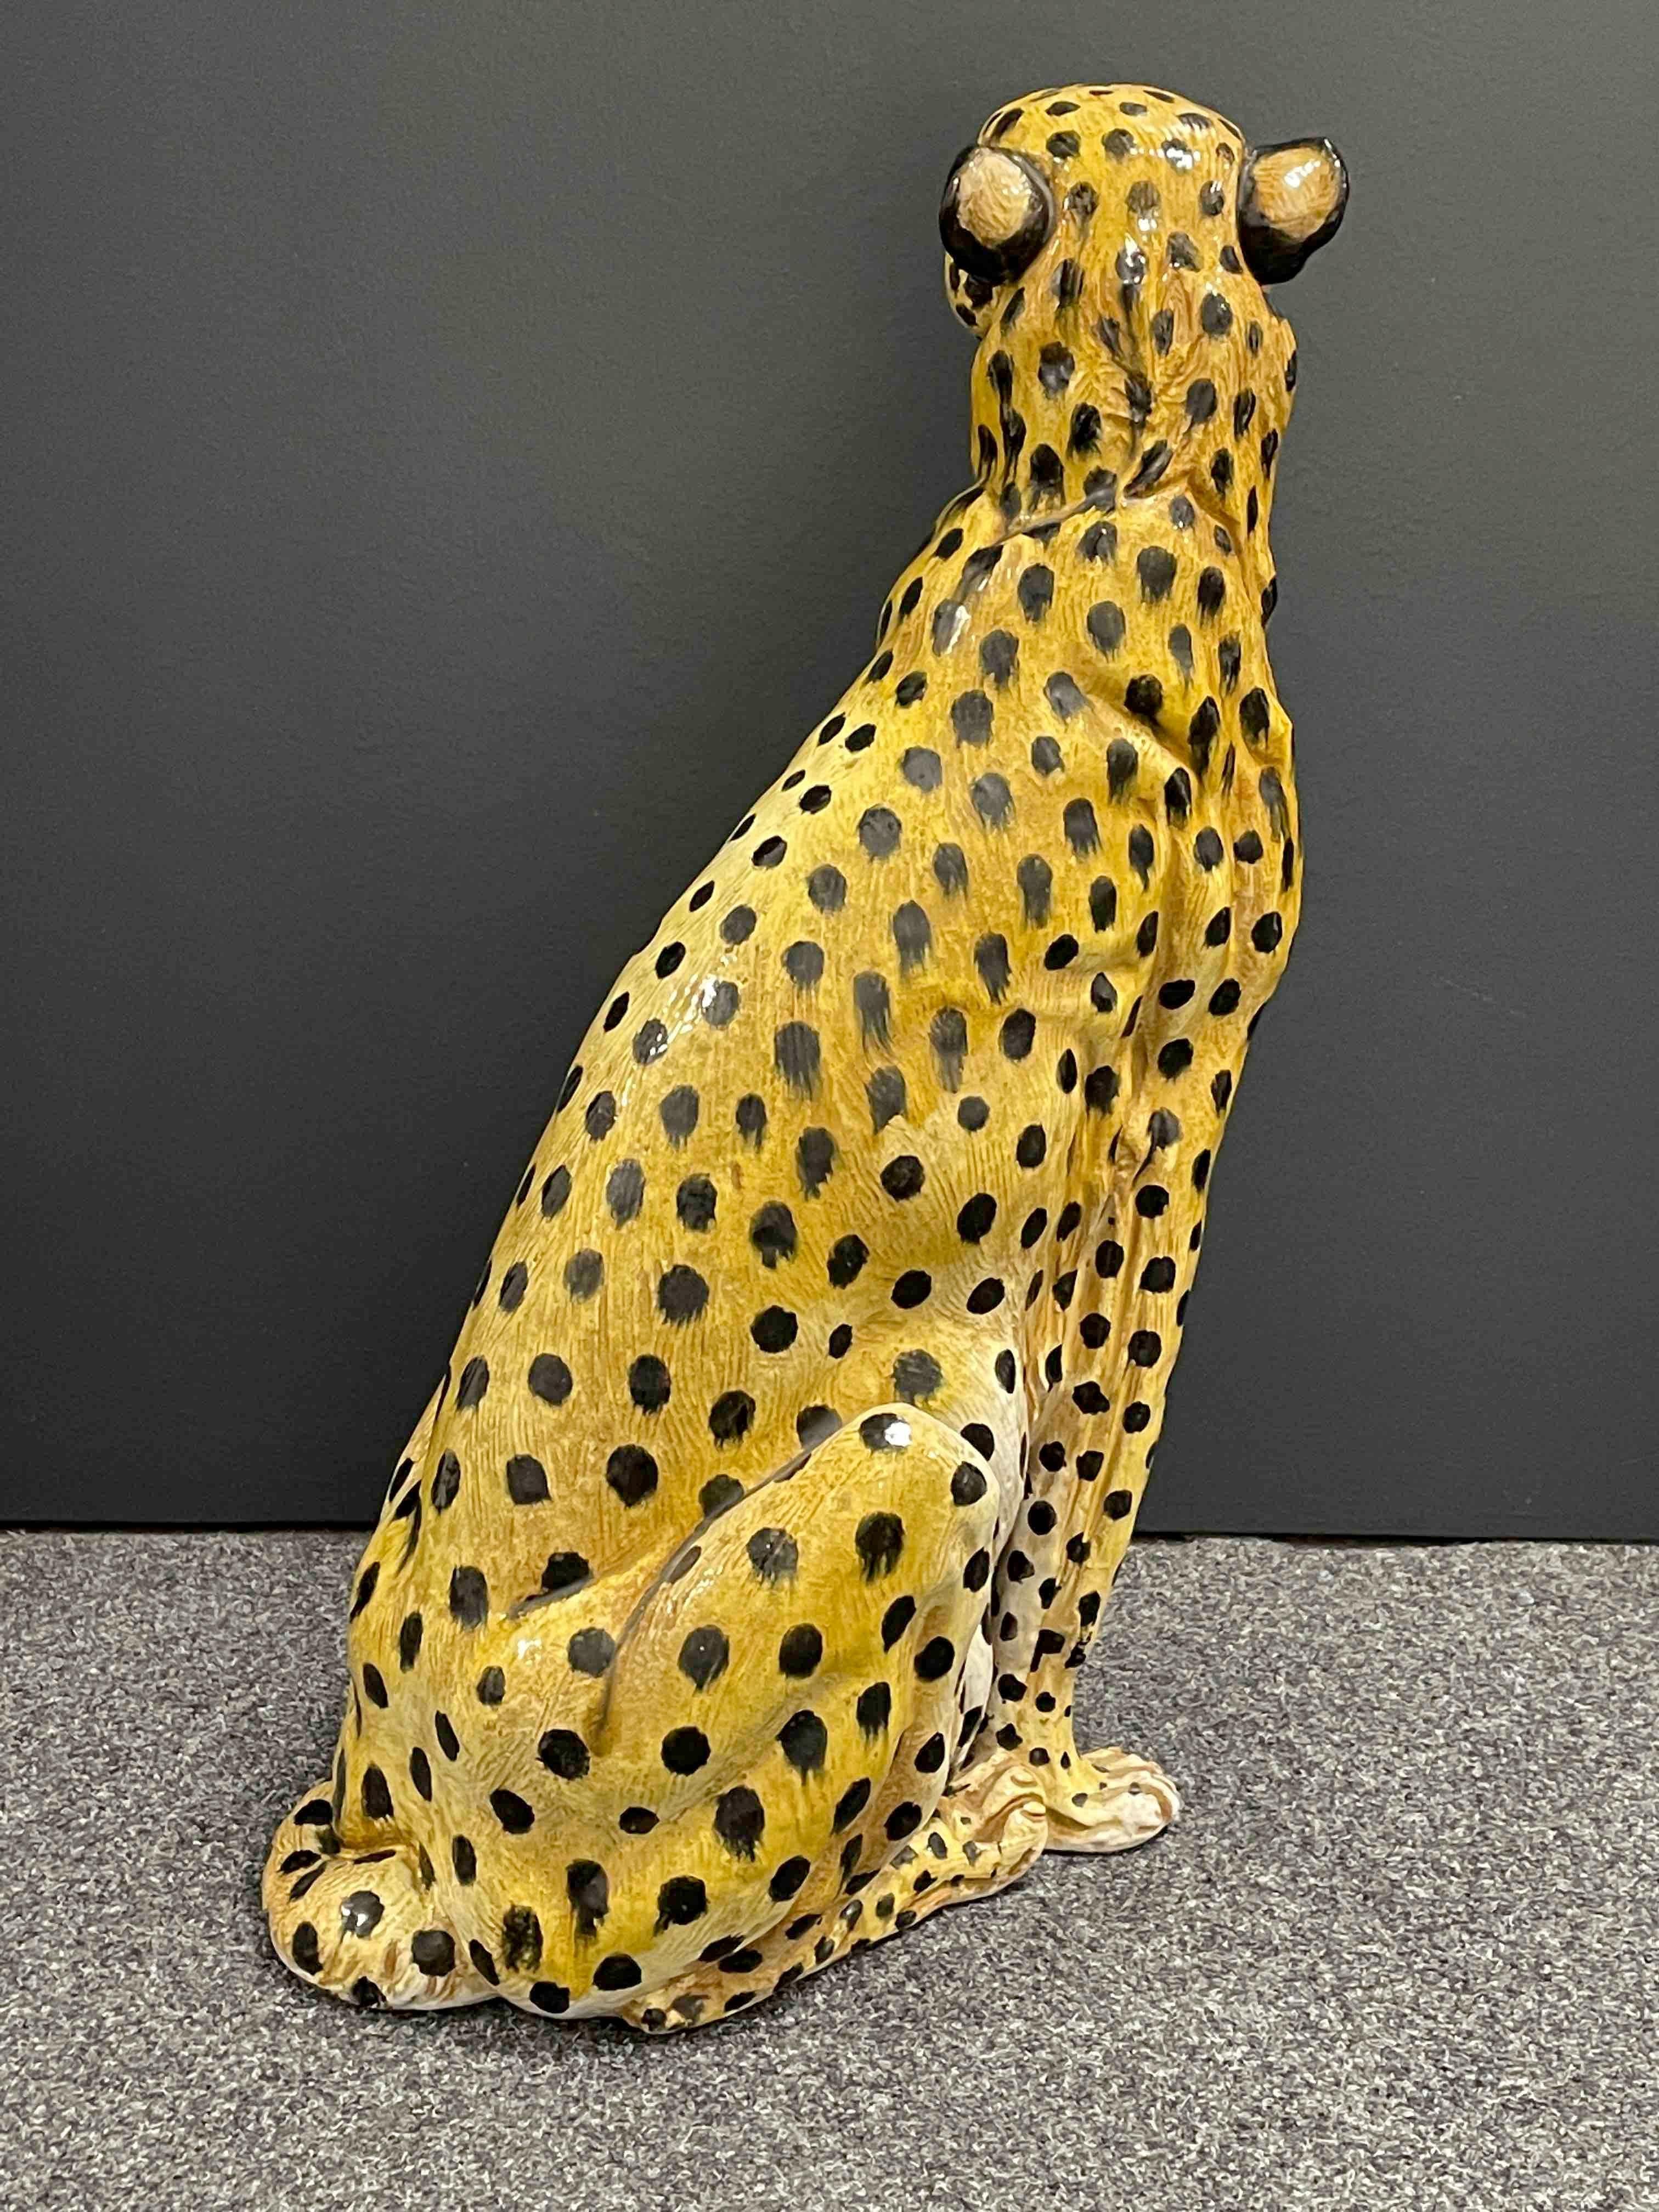 life size cheetah statue